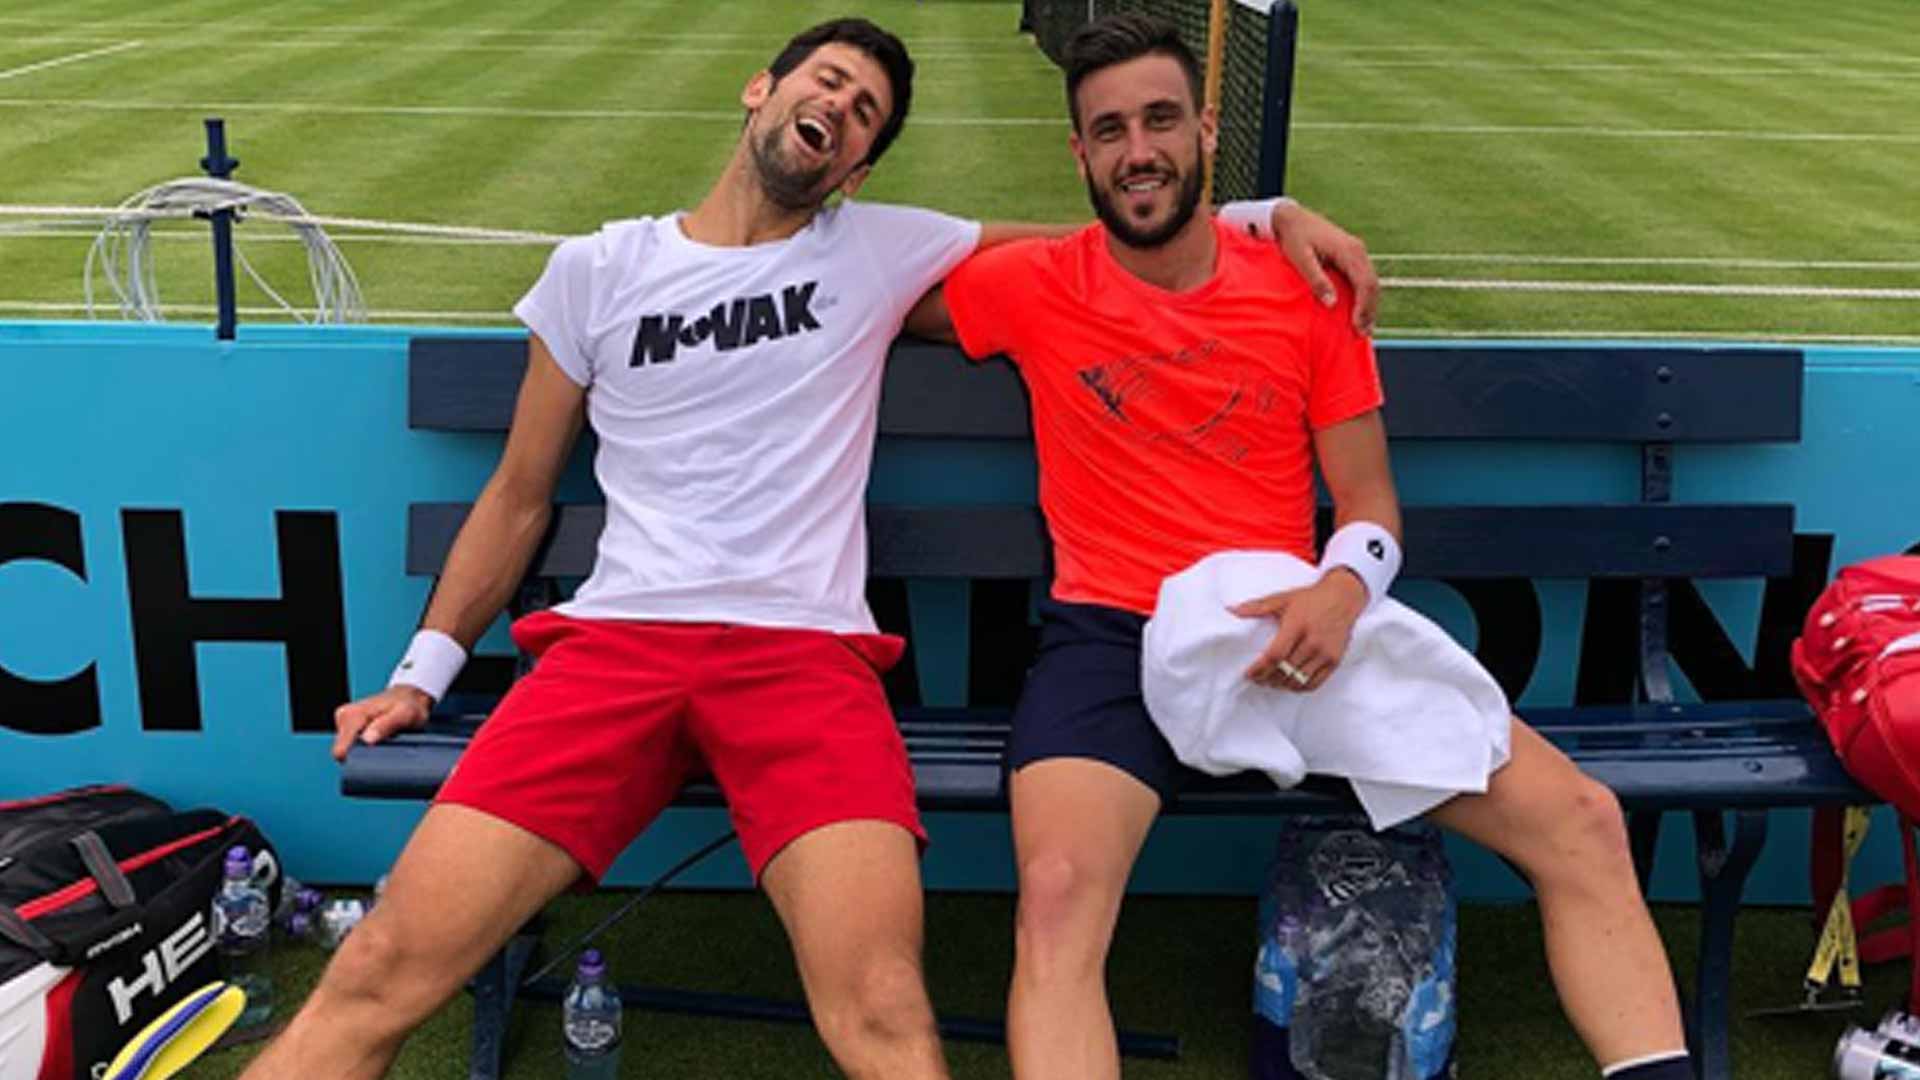 Damir Dzumhur and Novak Djokovic have fun at The Queen's Club in London.